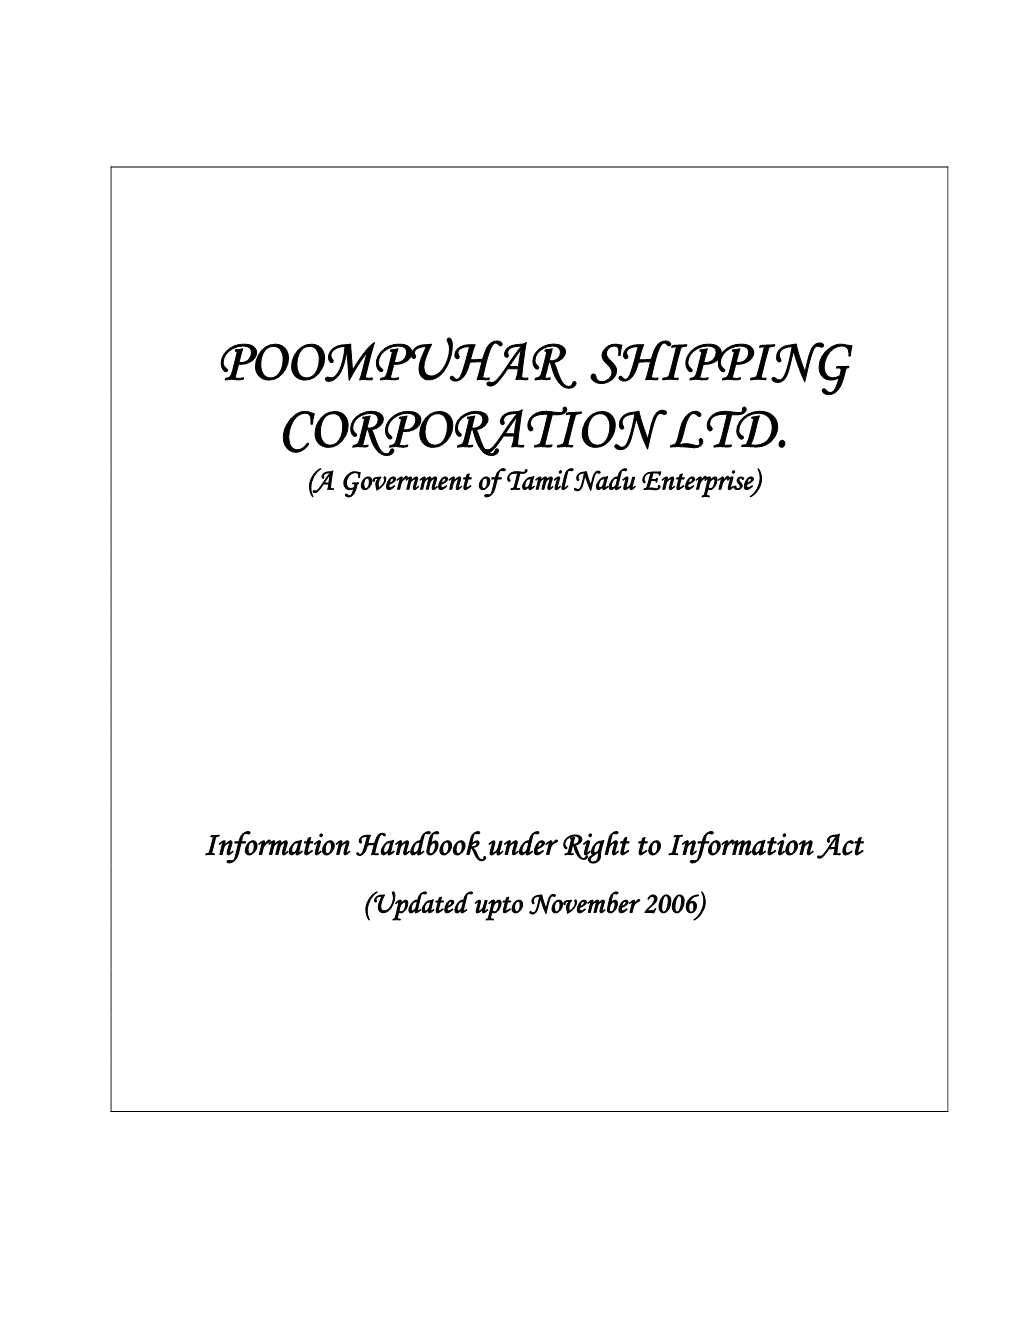 POOMPUHAR SHIPPING CORPORATION LTD. (A Government of Tamil Nadu Enterprise)